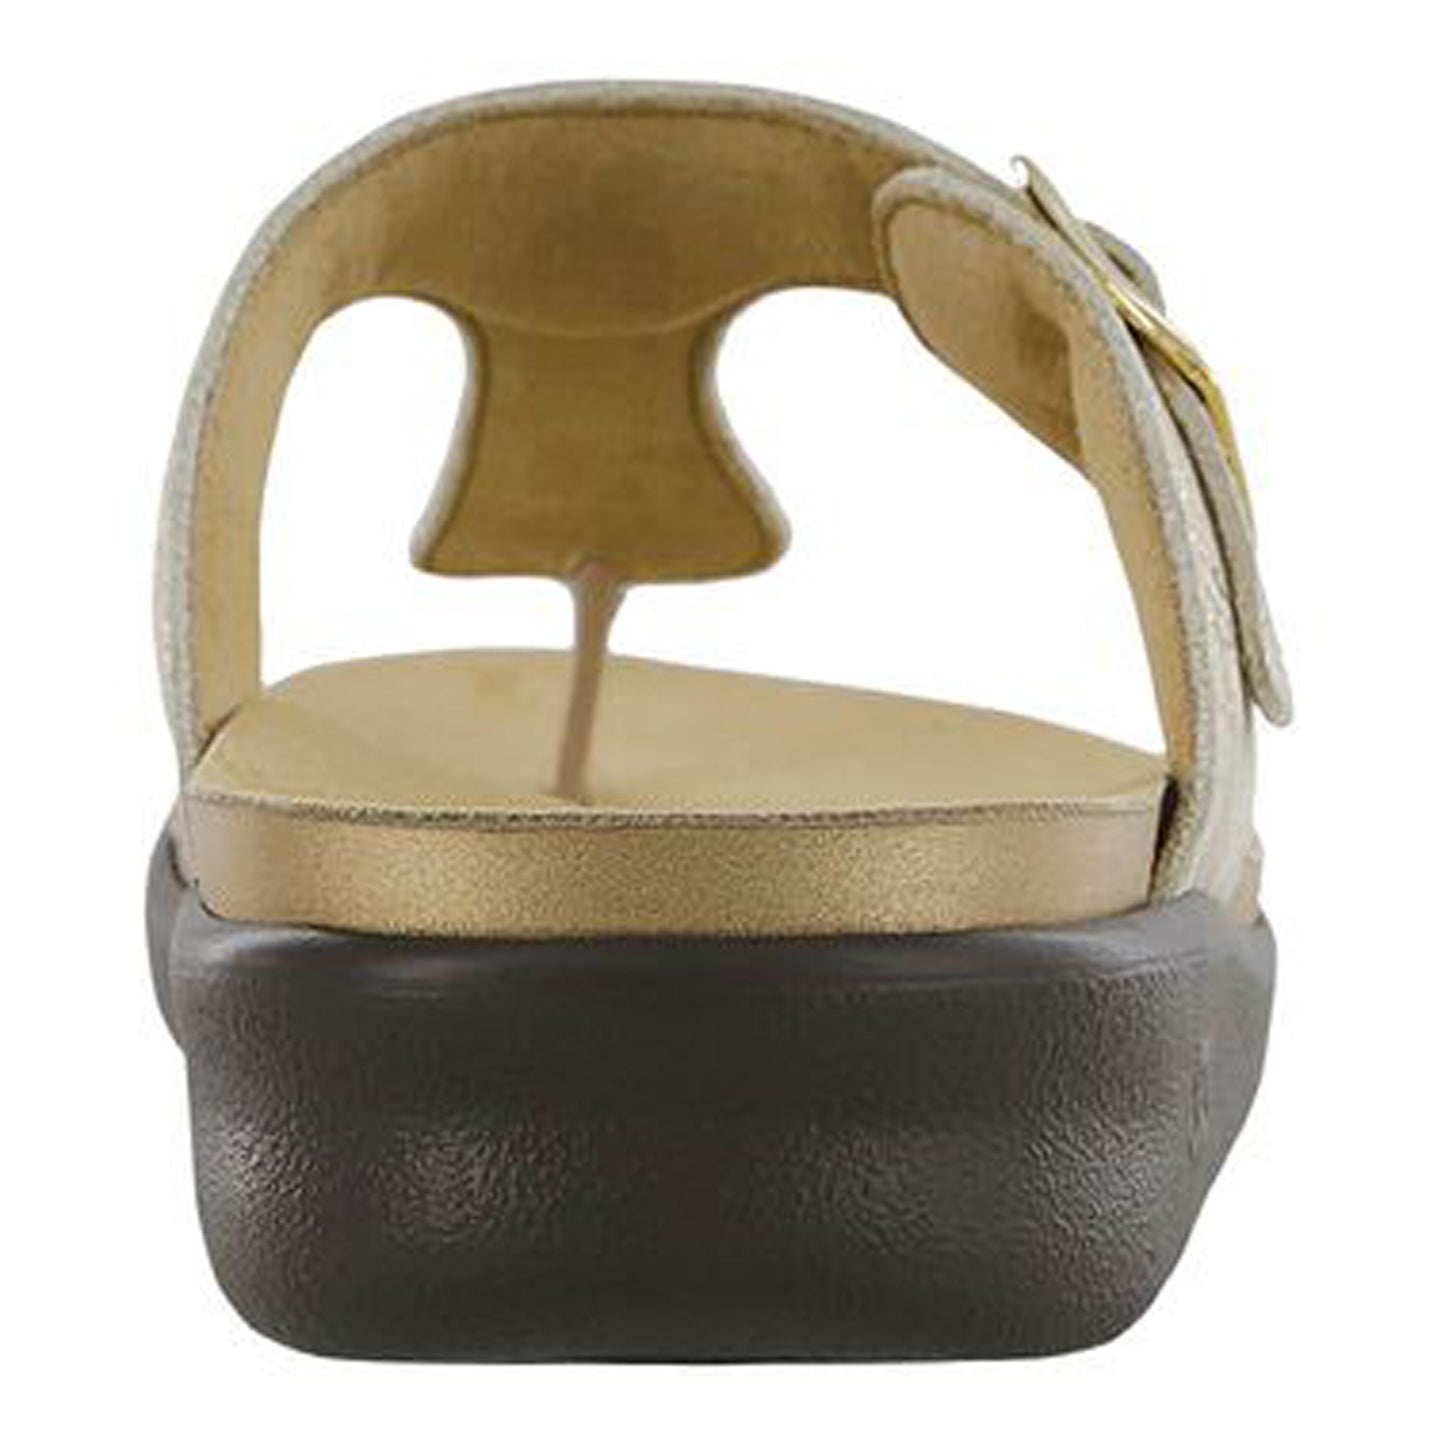 Peltz Shoes  Women's SAS Sanibel Thong Sandal GOLD SHINY SANIBEL GOLD